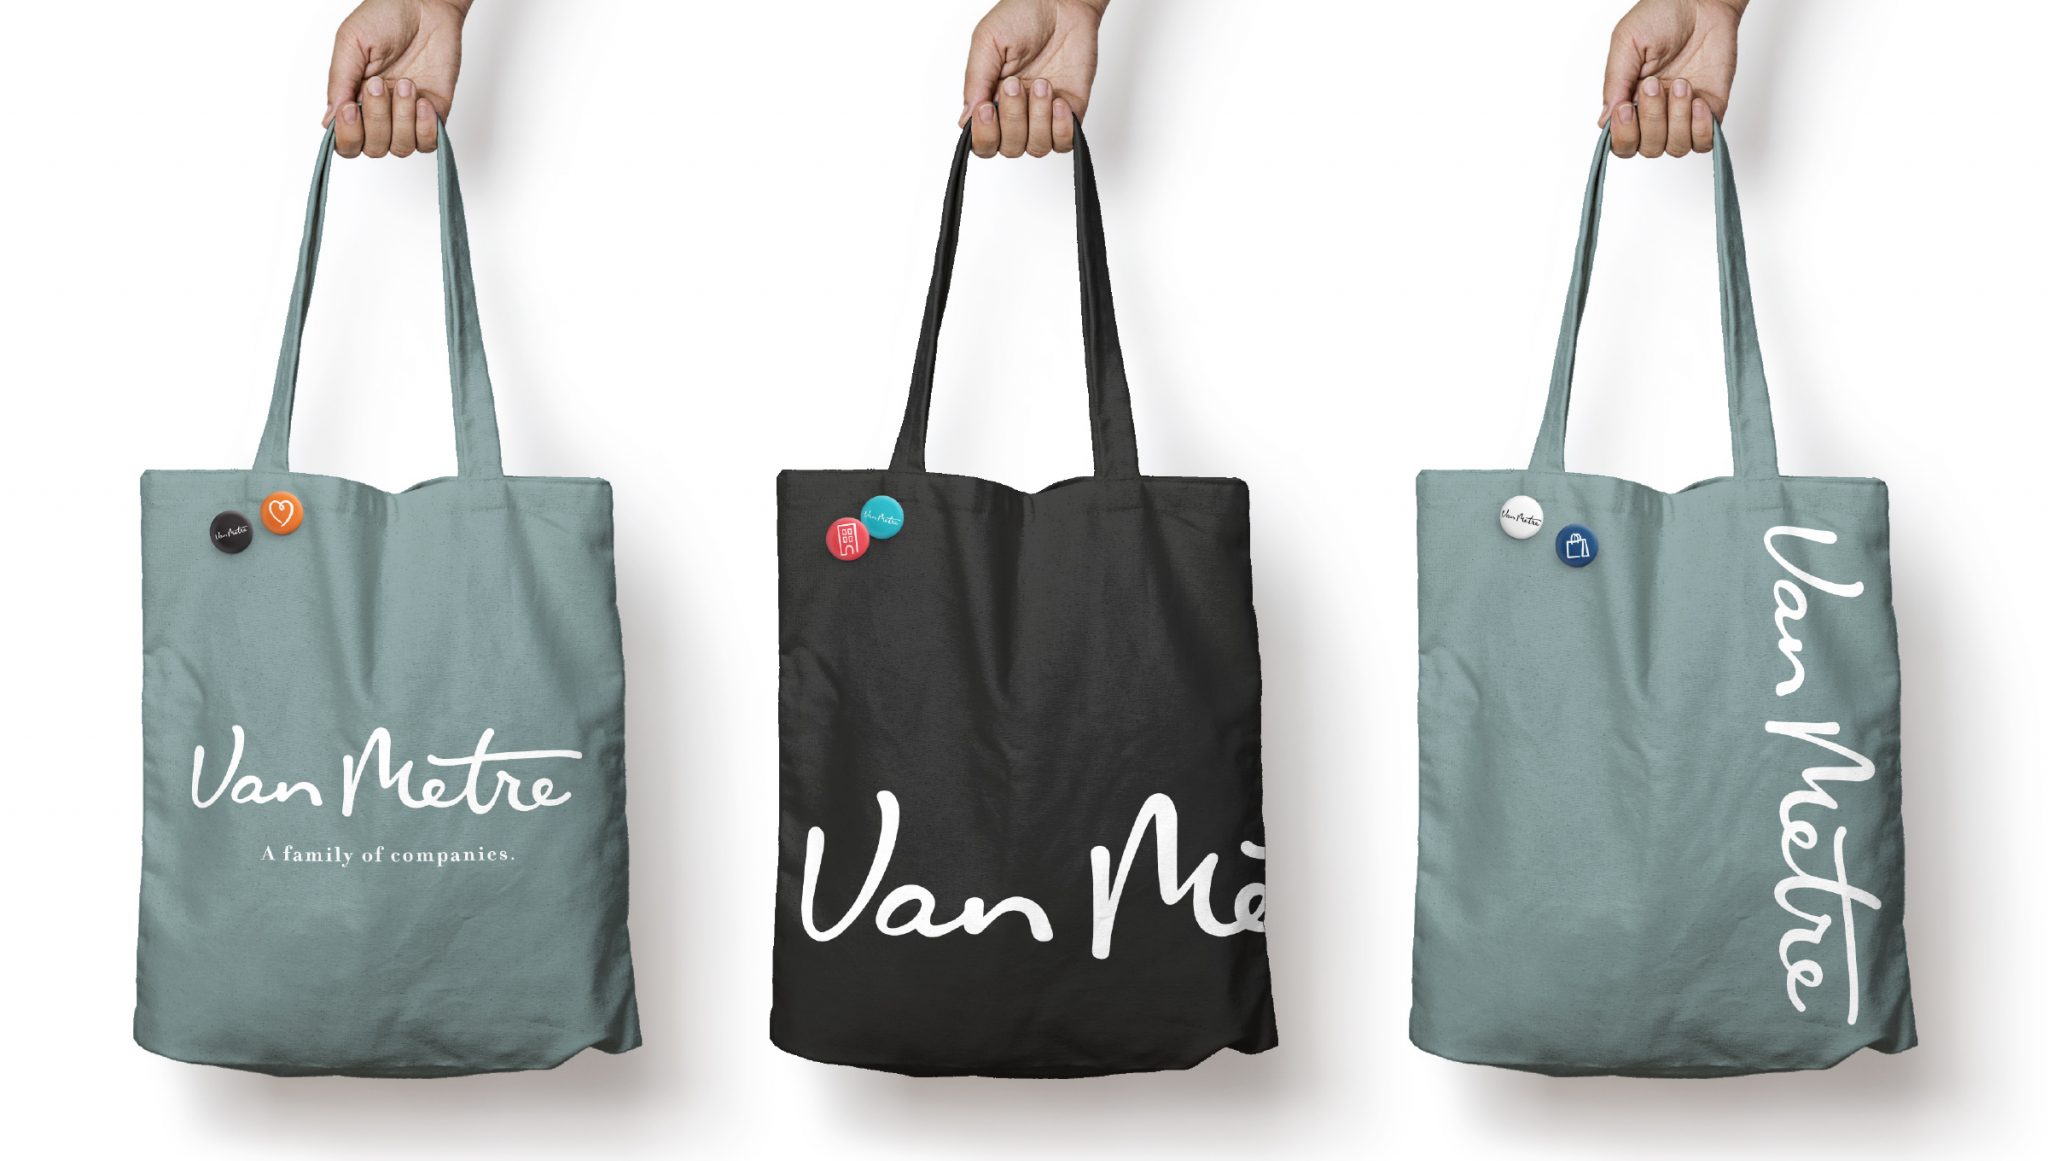 3 different tote bags designed for Van Metre